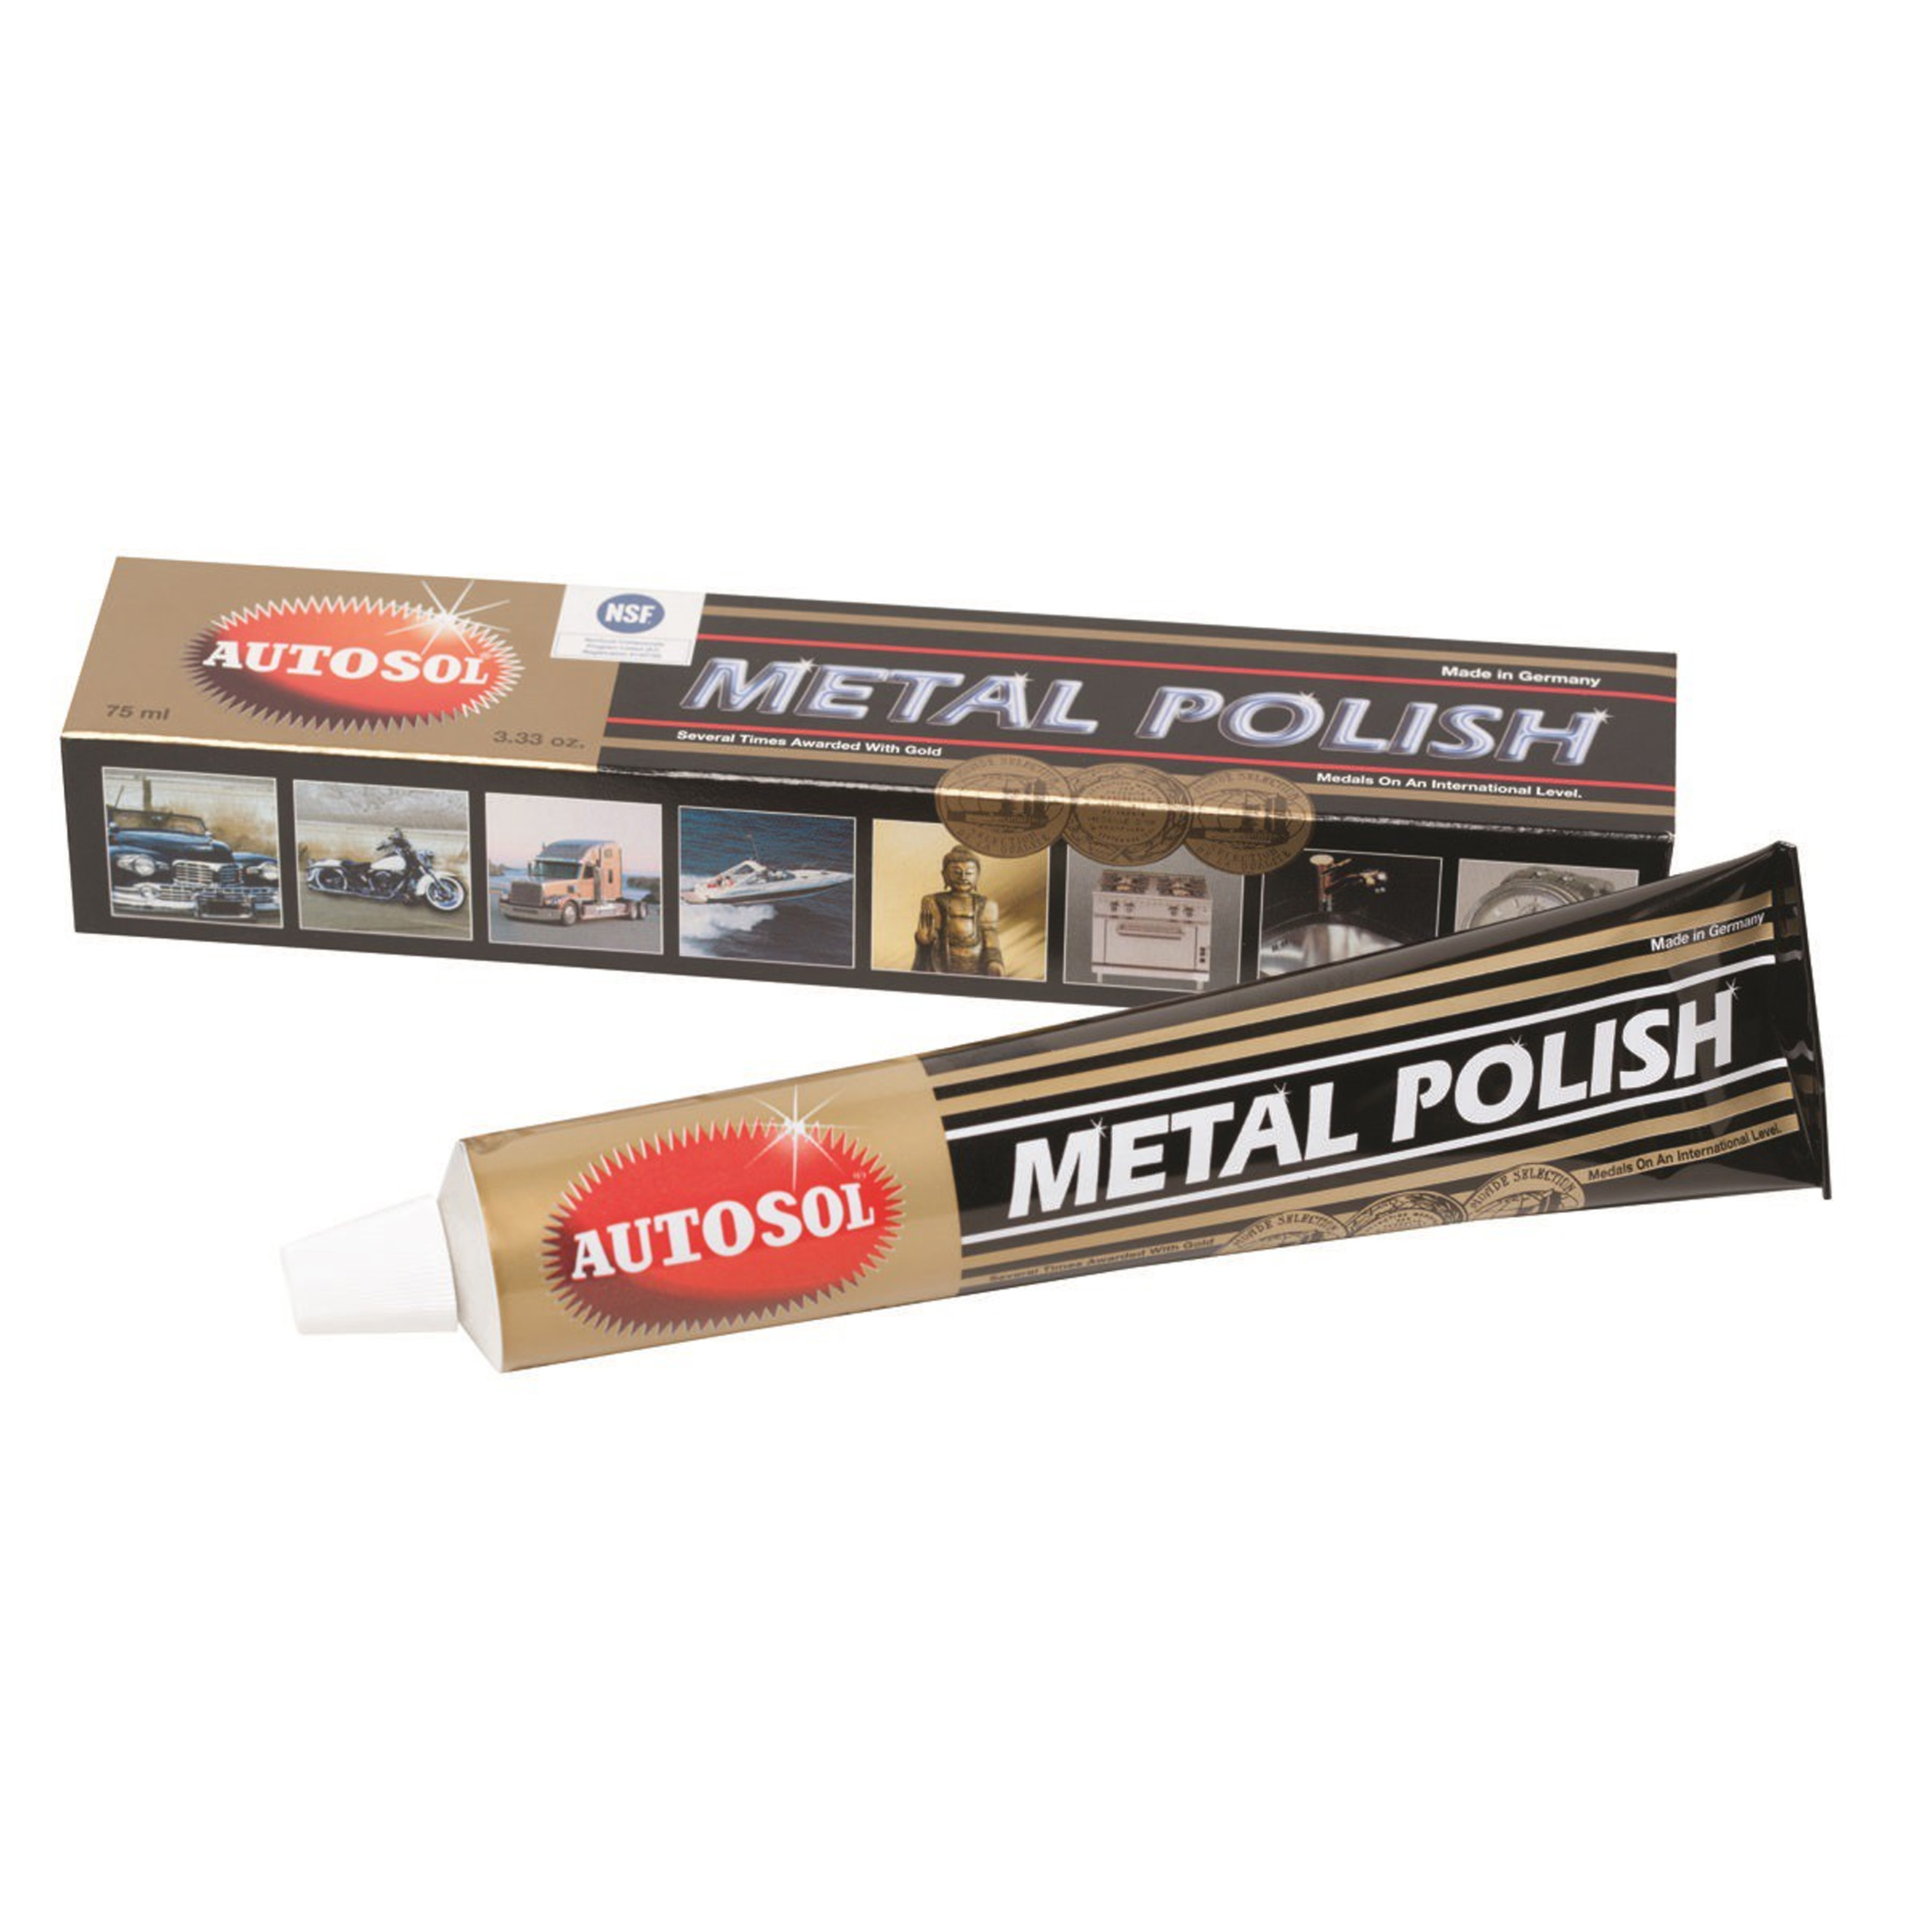 Autosol NATURAL Metal Polish